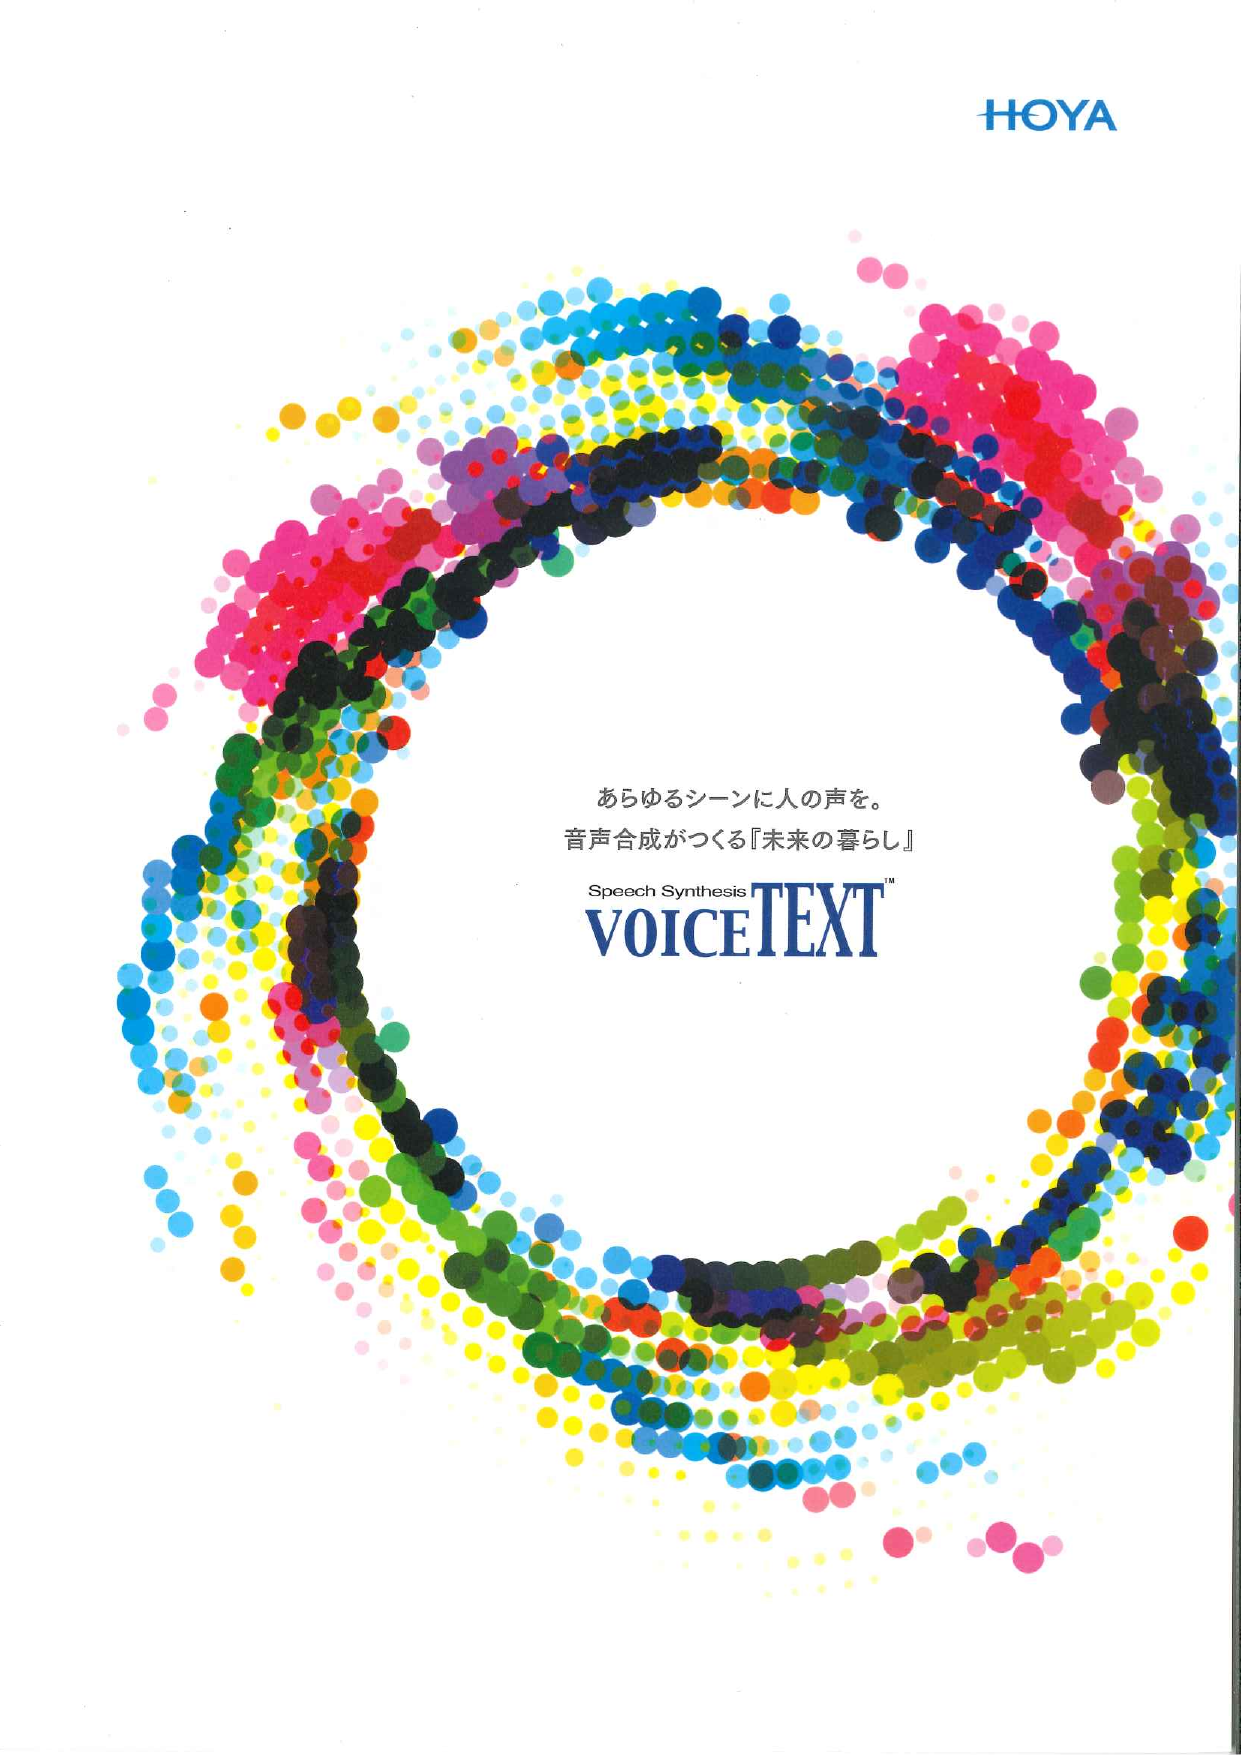 Hoya音声合成ソフトウェア Voicetext Speech Synthesis Voice Text Hoyaサービス株式会社 のカタログ無料ダウンロード 製造業向けカタログポータル Aperza Catalog アペルザカタログ